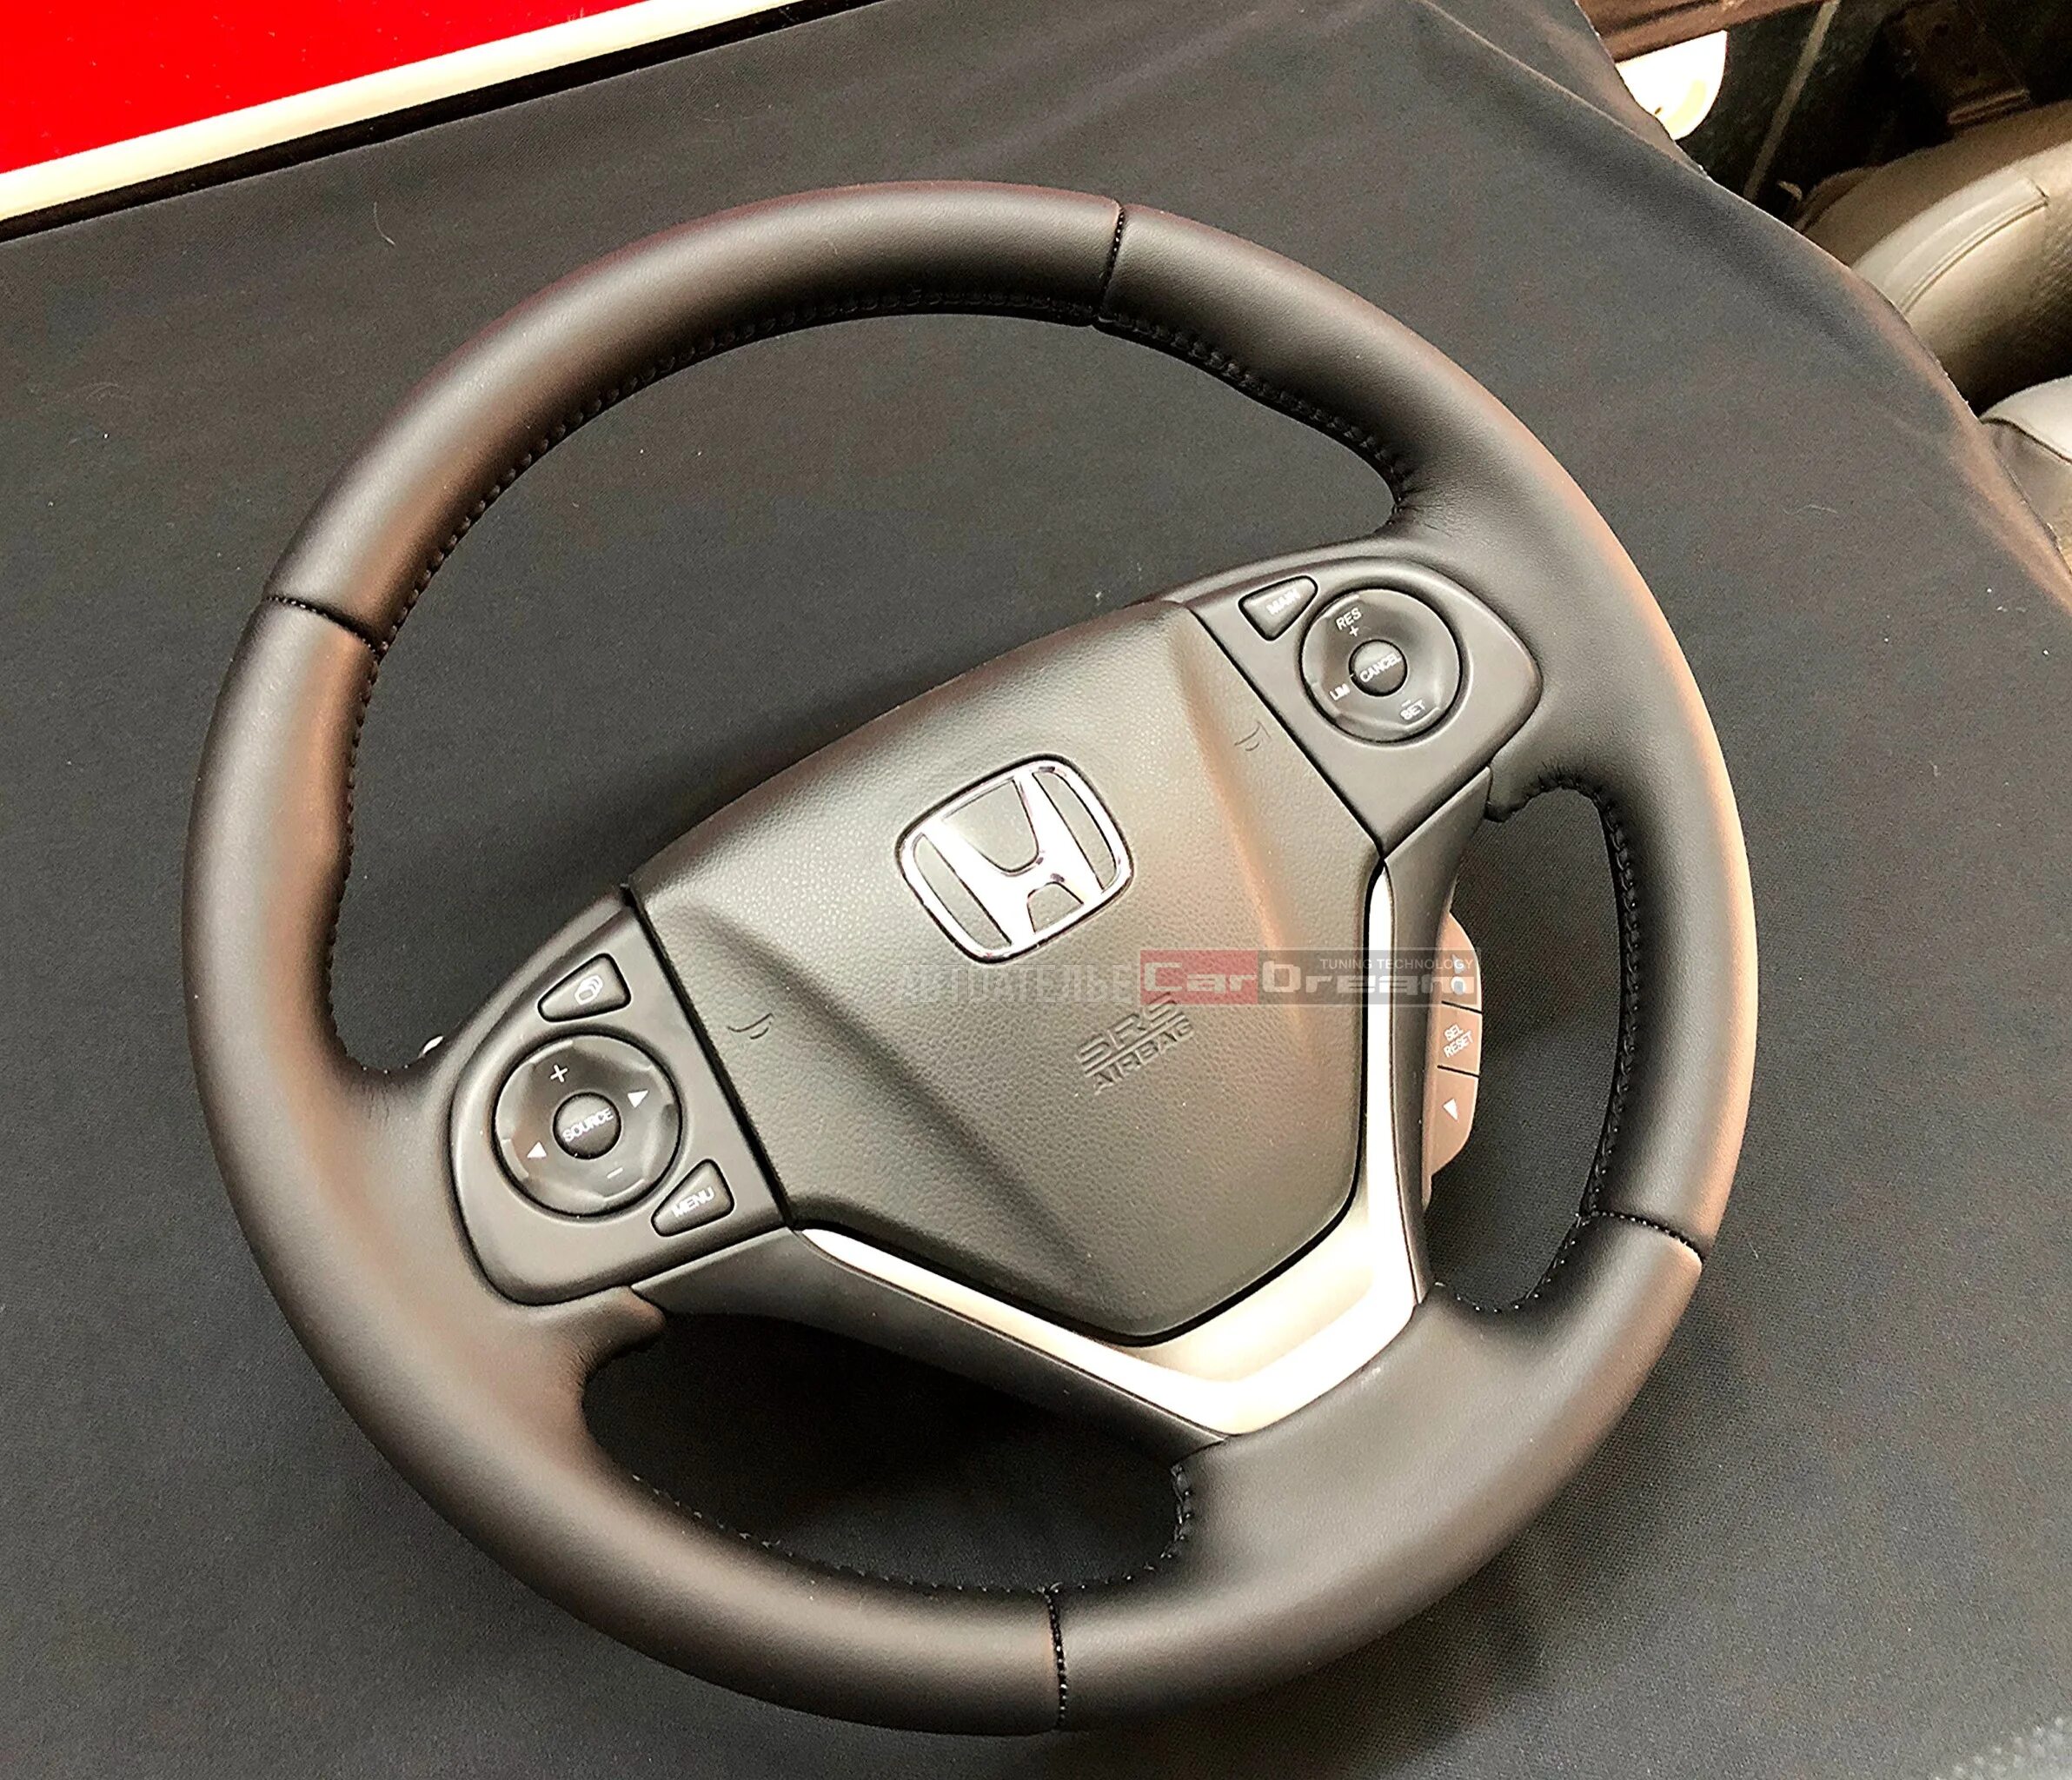 Honda CR-V 3 руль. Honda CRV 2013 руль. Кожаный руль Honda CRV. Руль Honda CR-V. Honda crv руль